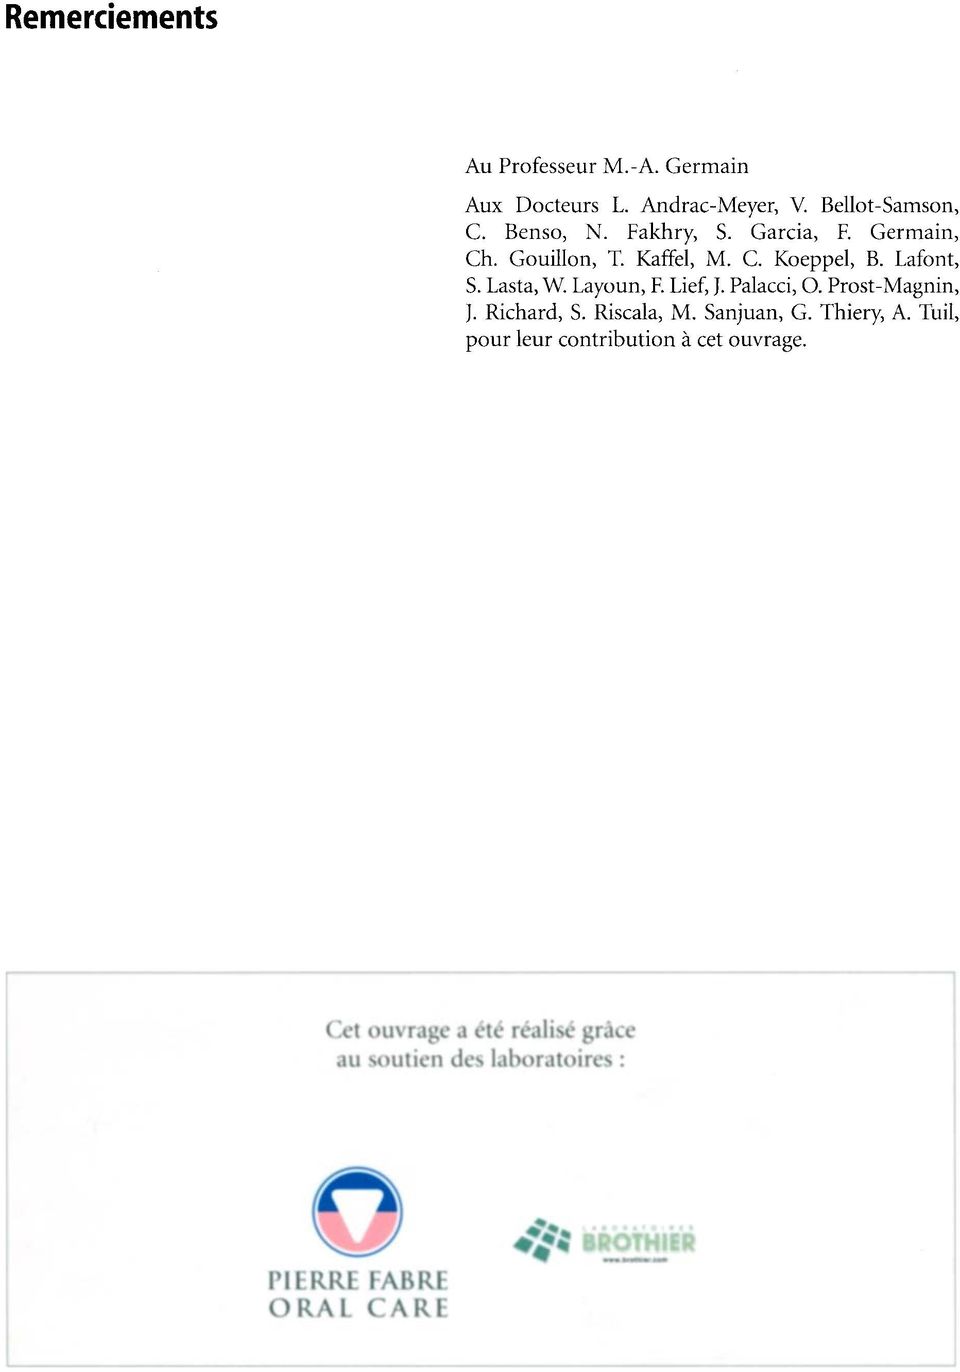 Lief,J. Palacci, O. Prost-Magnin, J. Richard, S. Riscala, M. Sanjuan, G. Thiery, A.